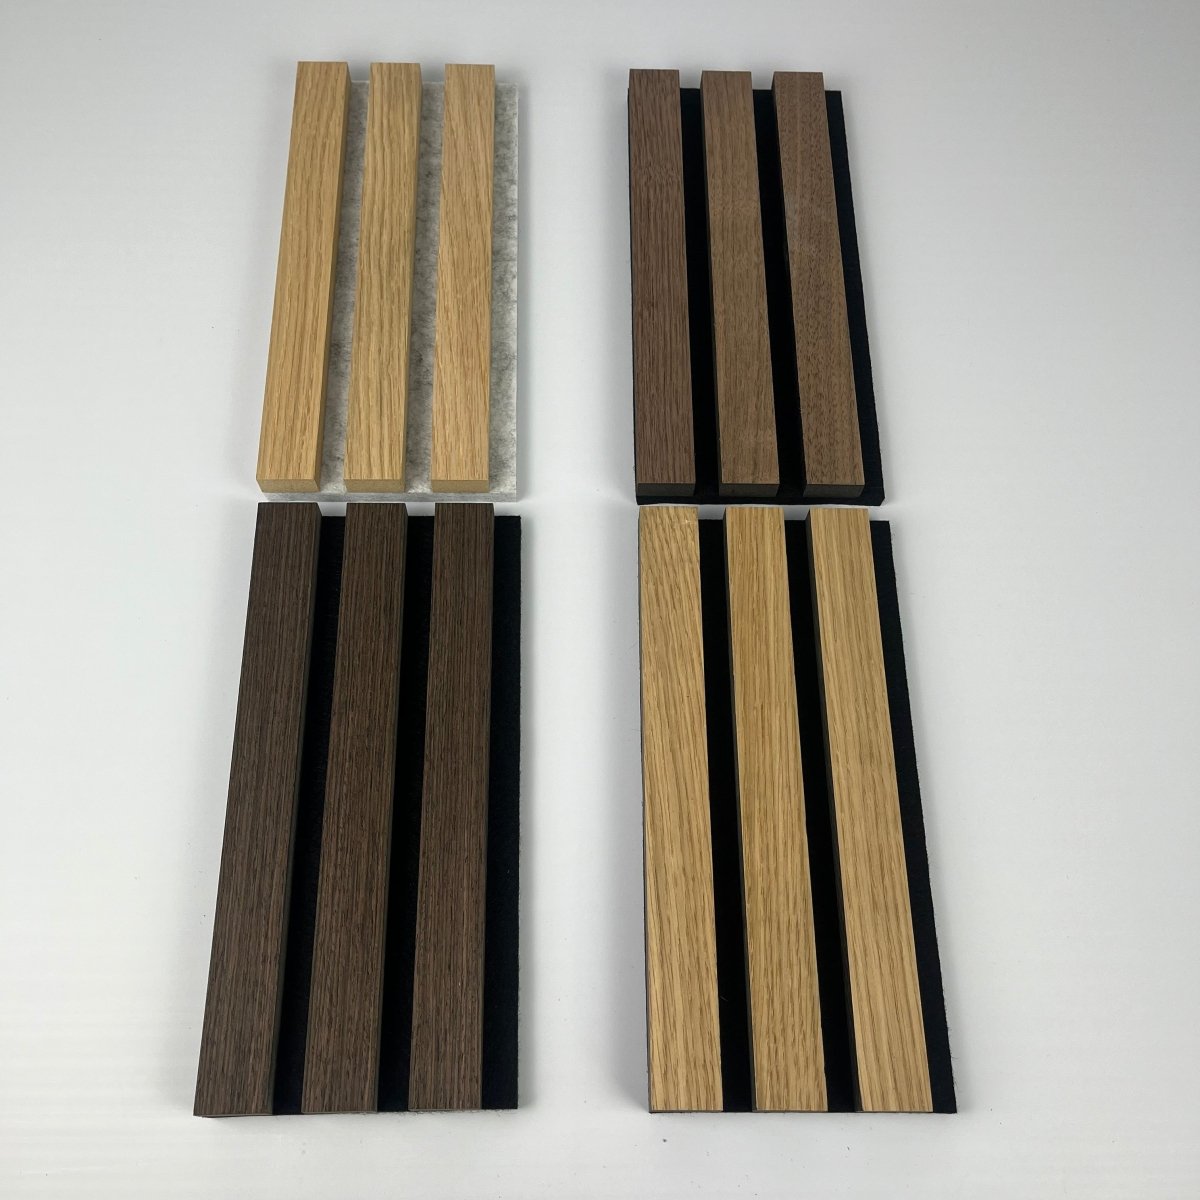 Acoustic Wood Wall Panel Sample Box - WallPanels.com.au